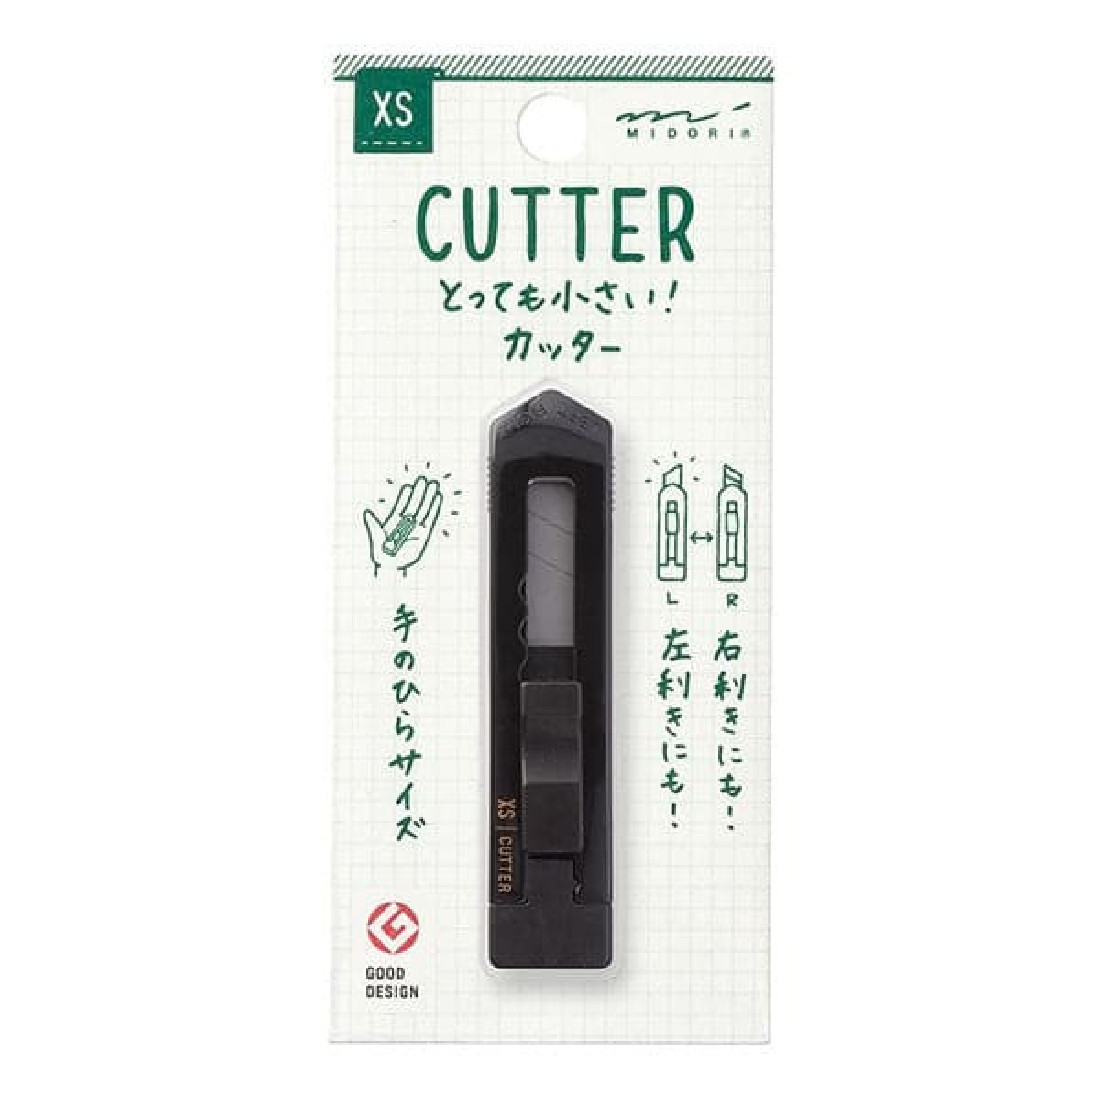 Midori XS (extra small) Cutter Black 35526006